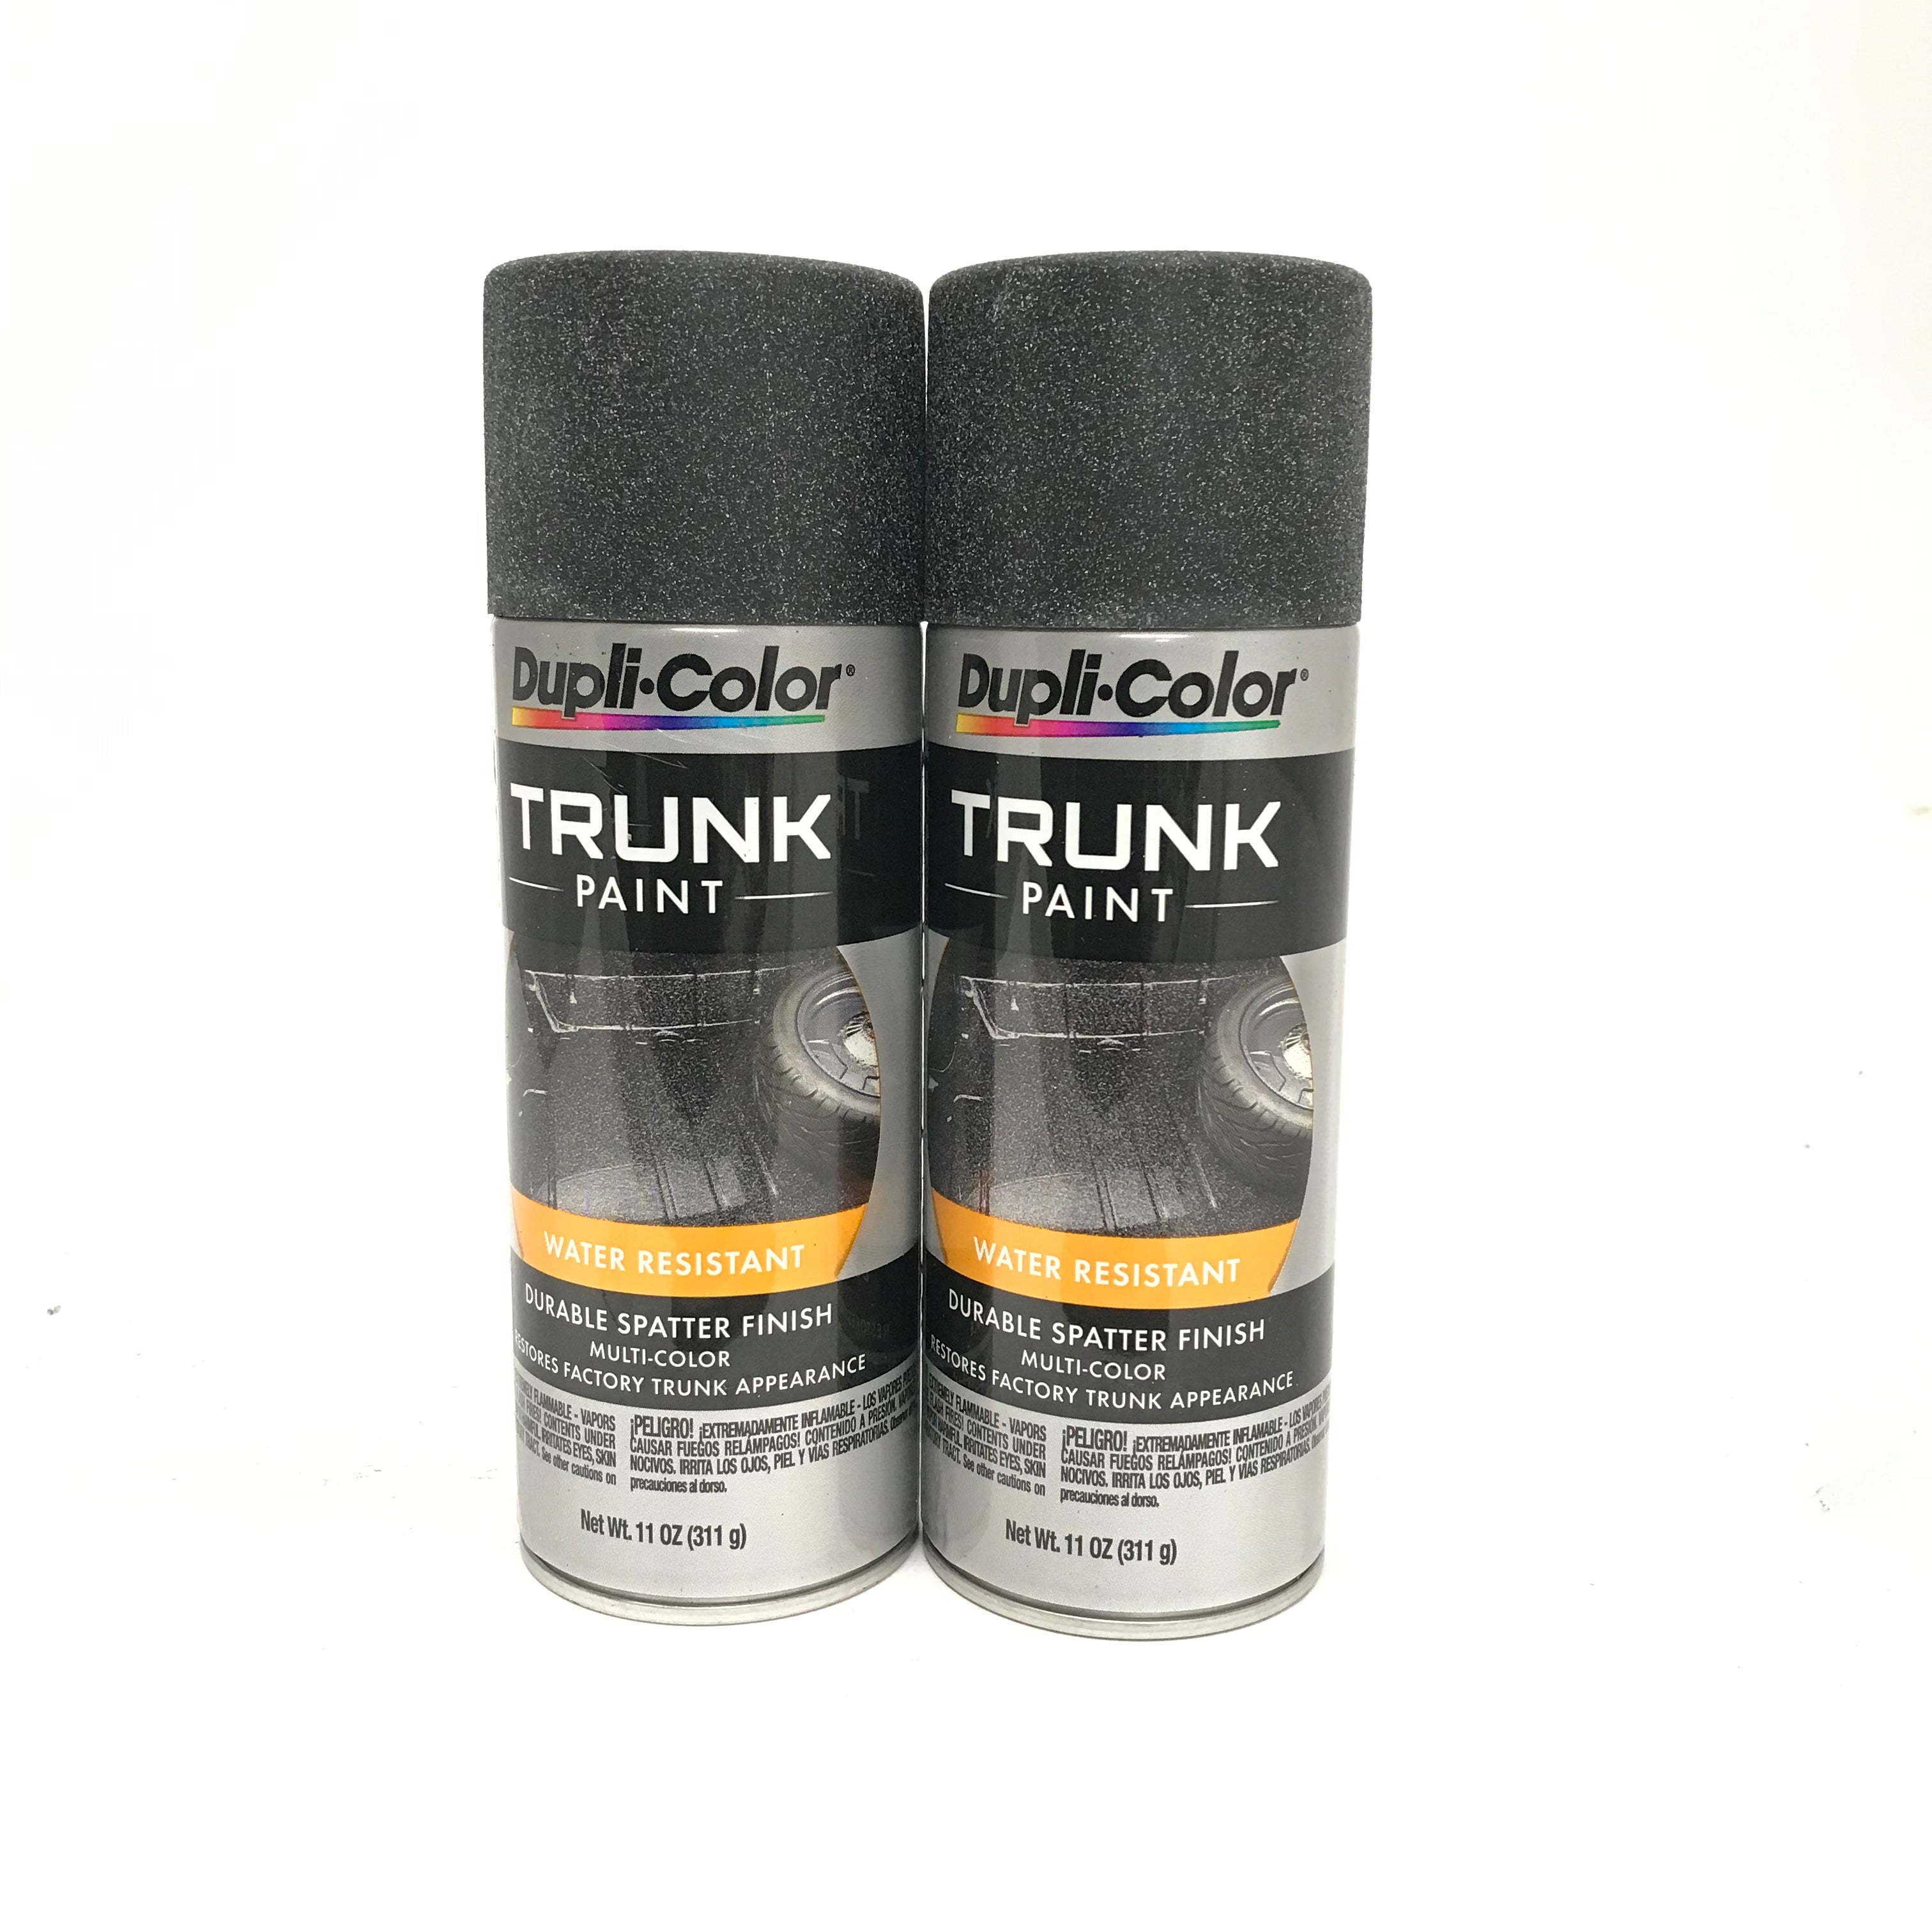 Duplicolor TP101-3 PACK BLACK All Weather Long-lasting Tire Paint - 11oz  Aerosol